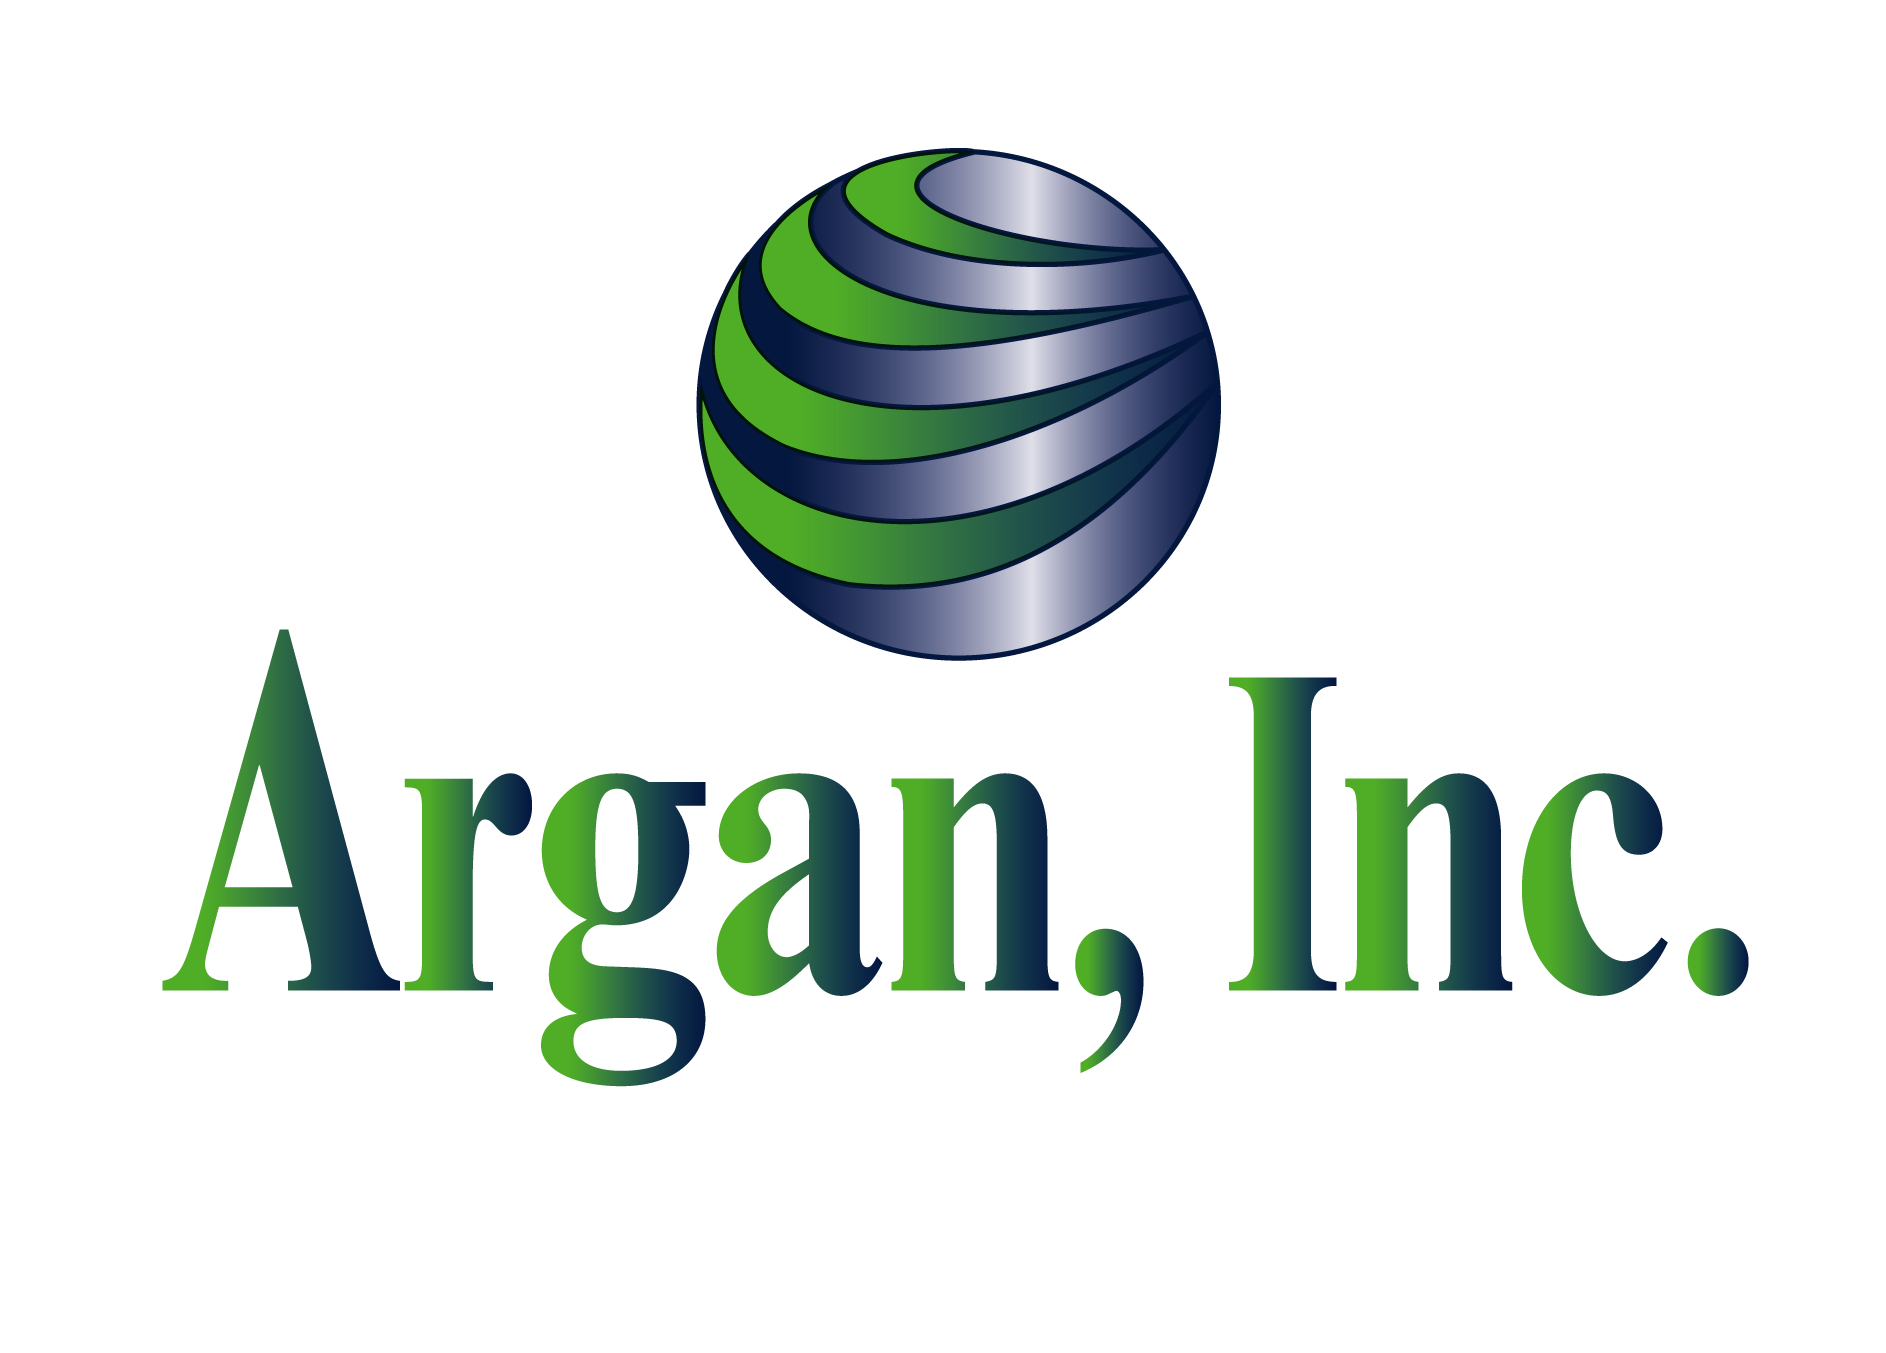 Argan, Inc.